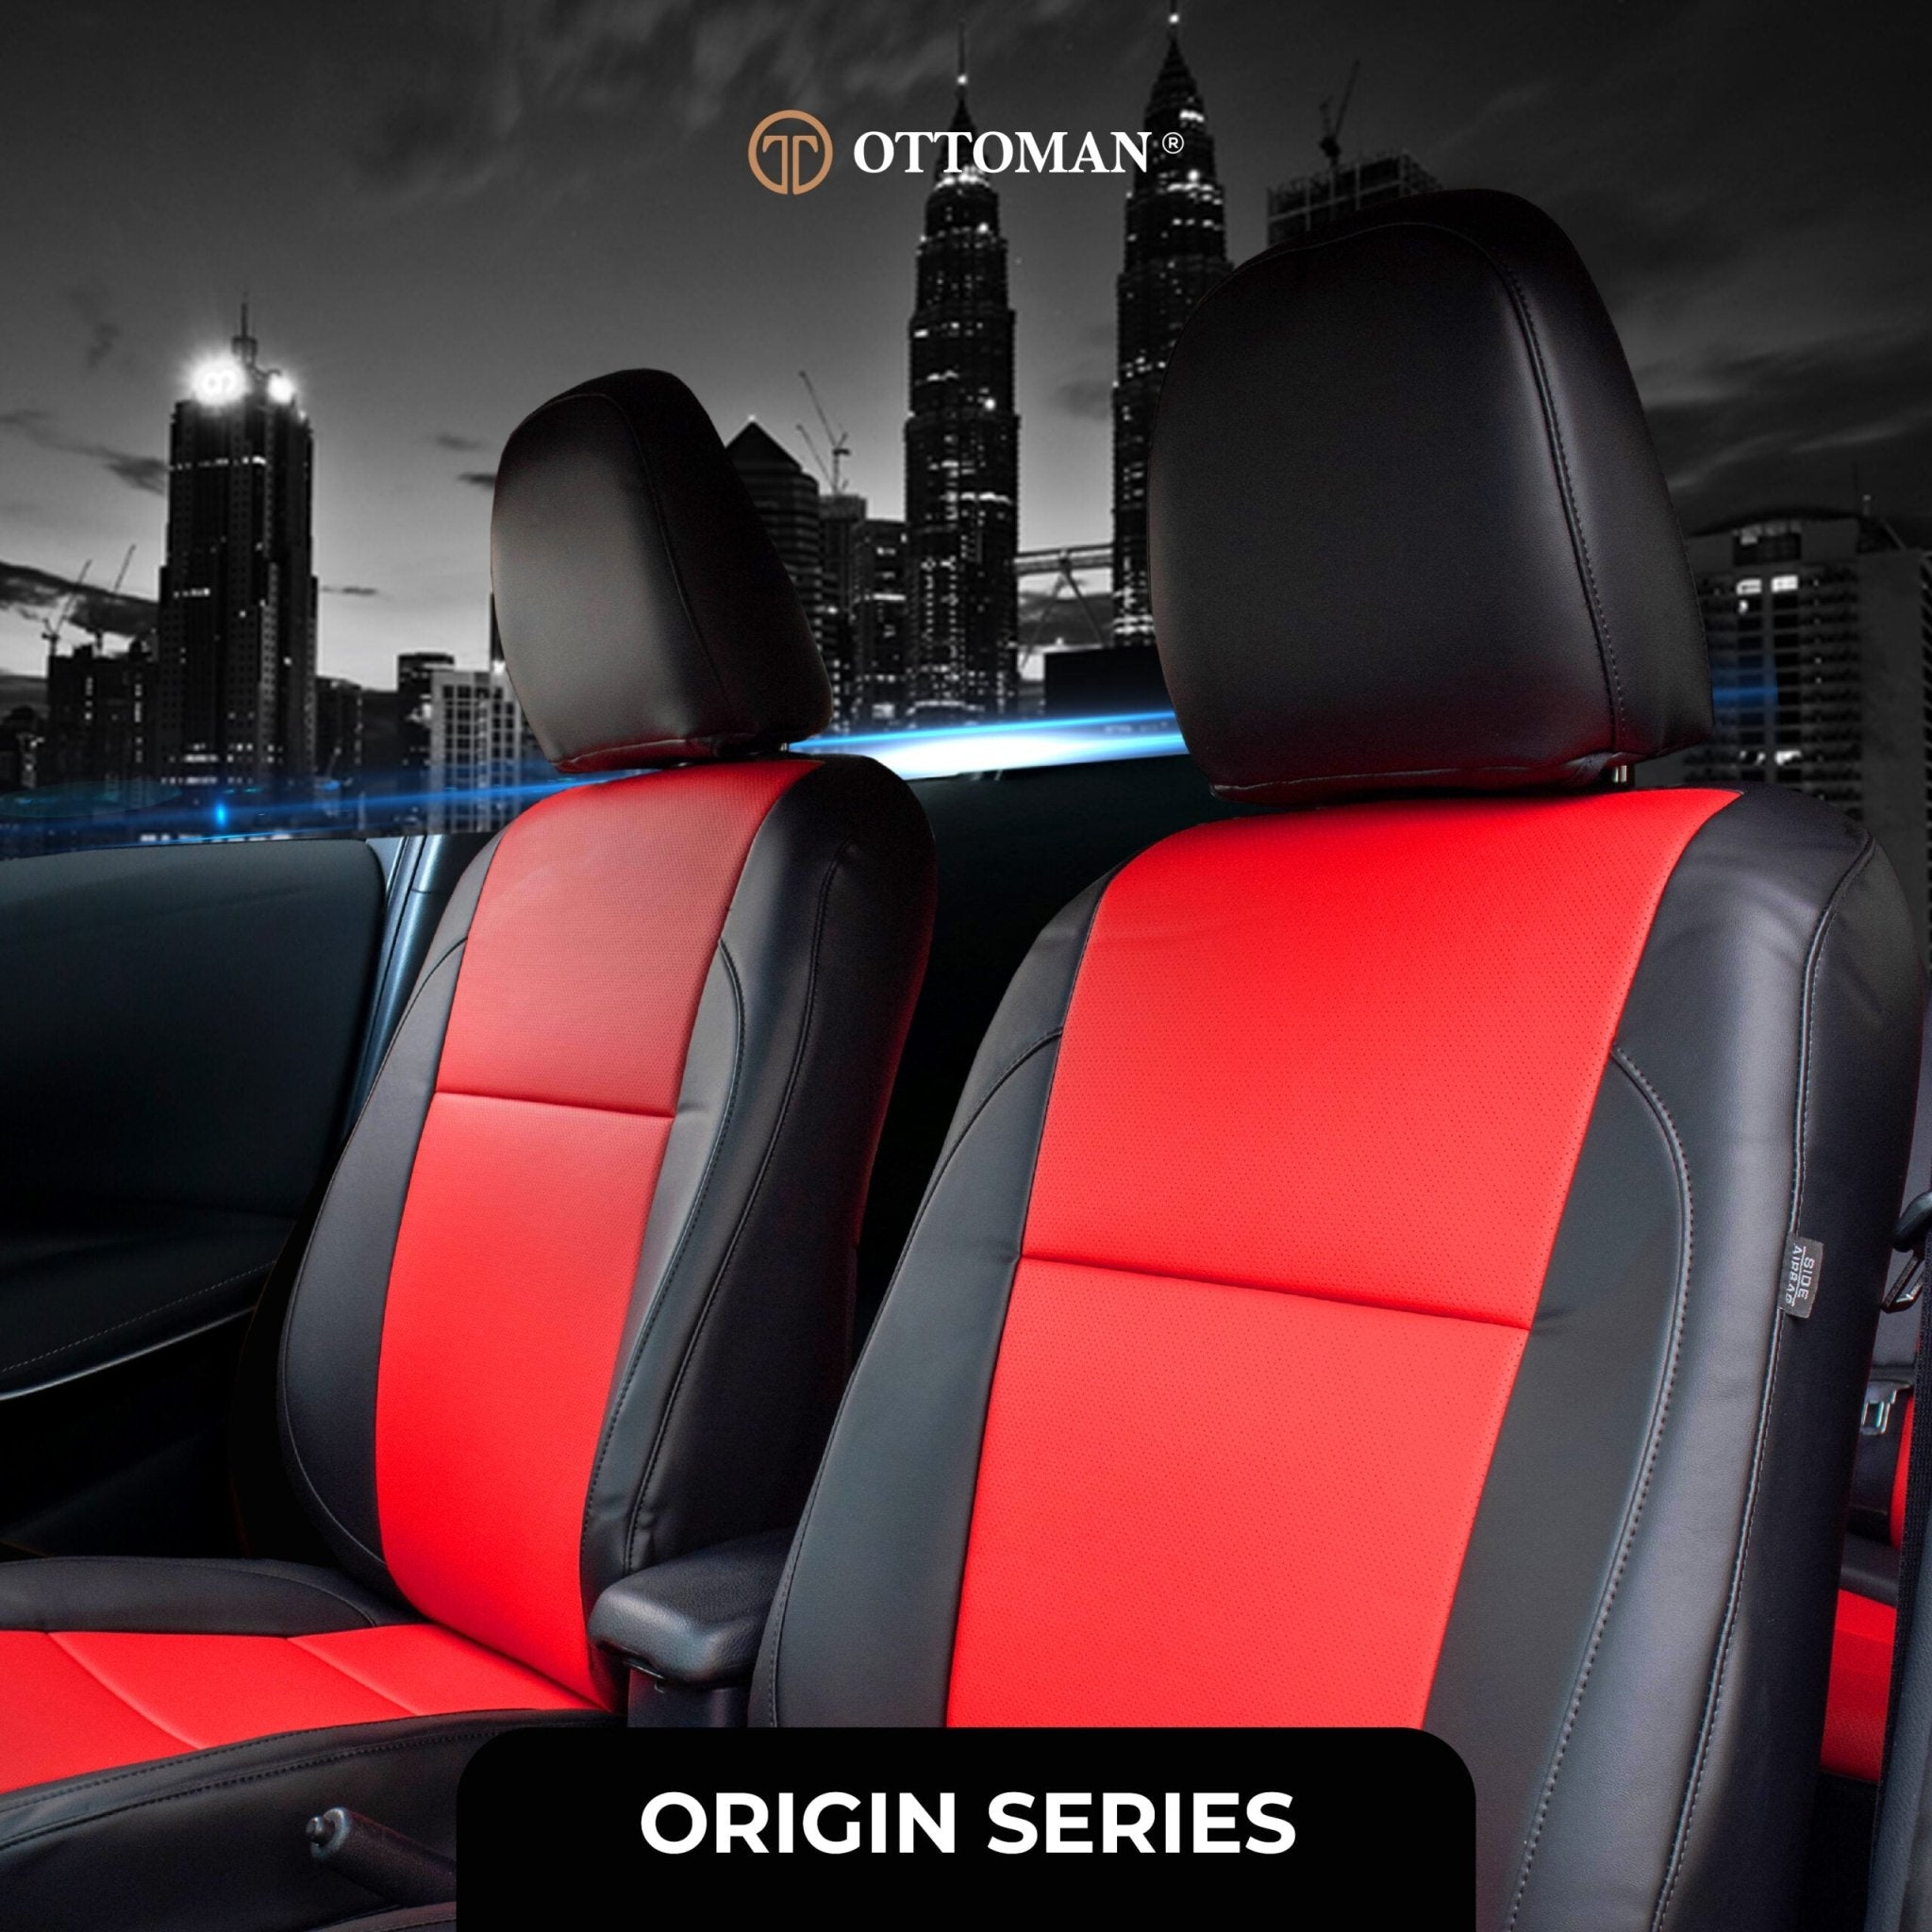 Honda CRZ Hybrid (2011-2016) Ottoman Seat Cover Seat Cover in Klang Selangor, Penang, Johor Bahru - Ottoman Car Mats